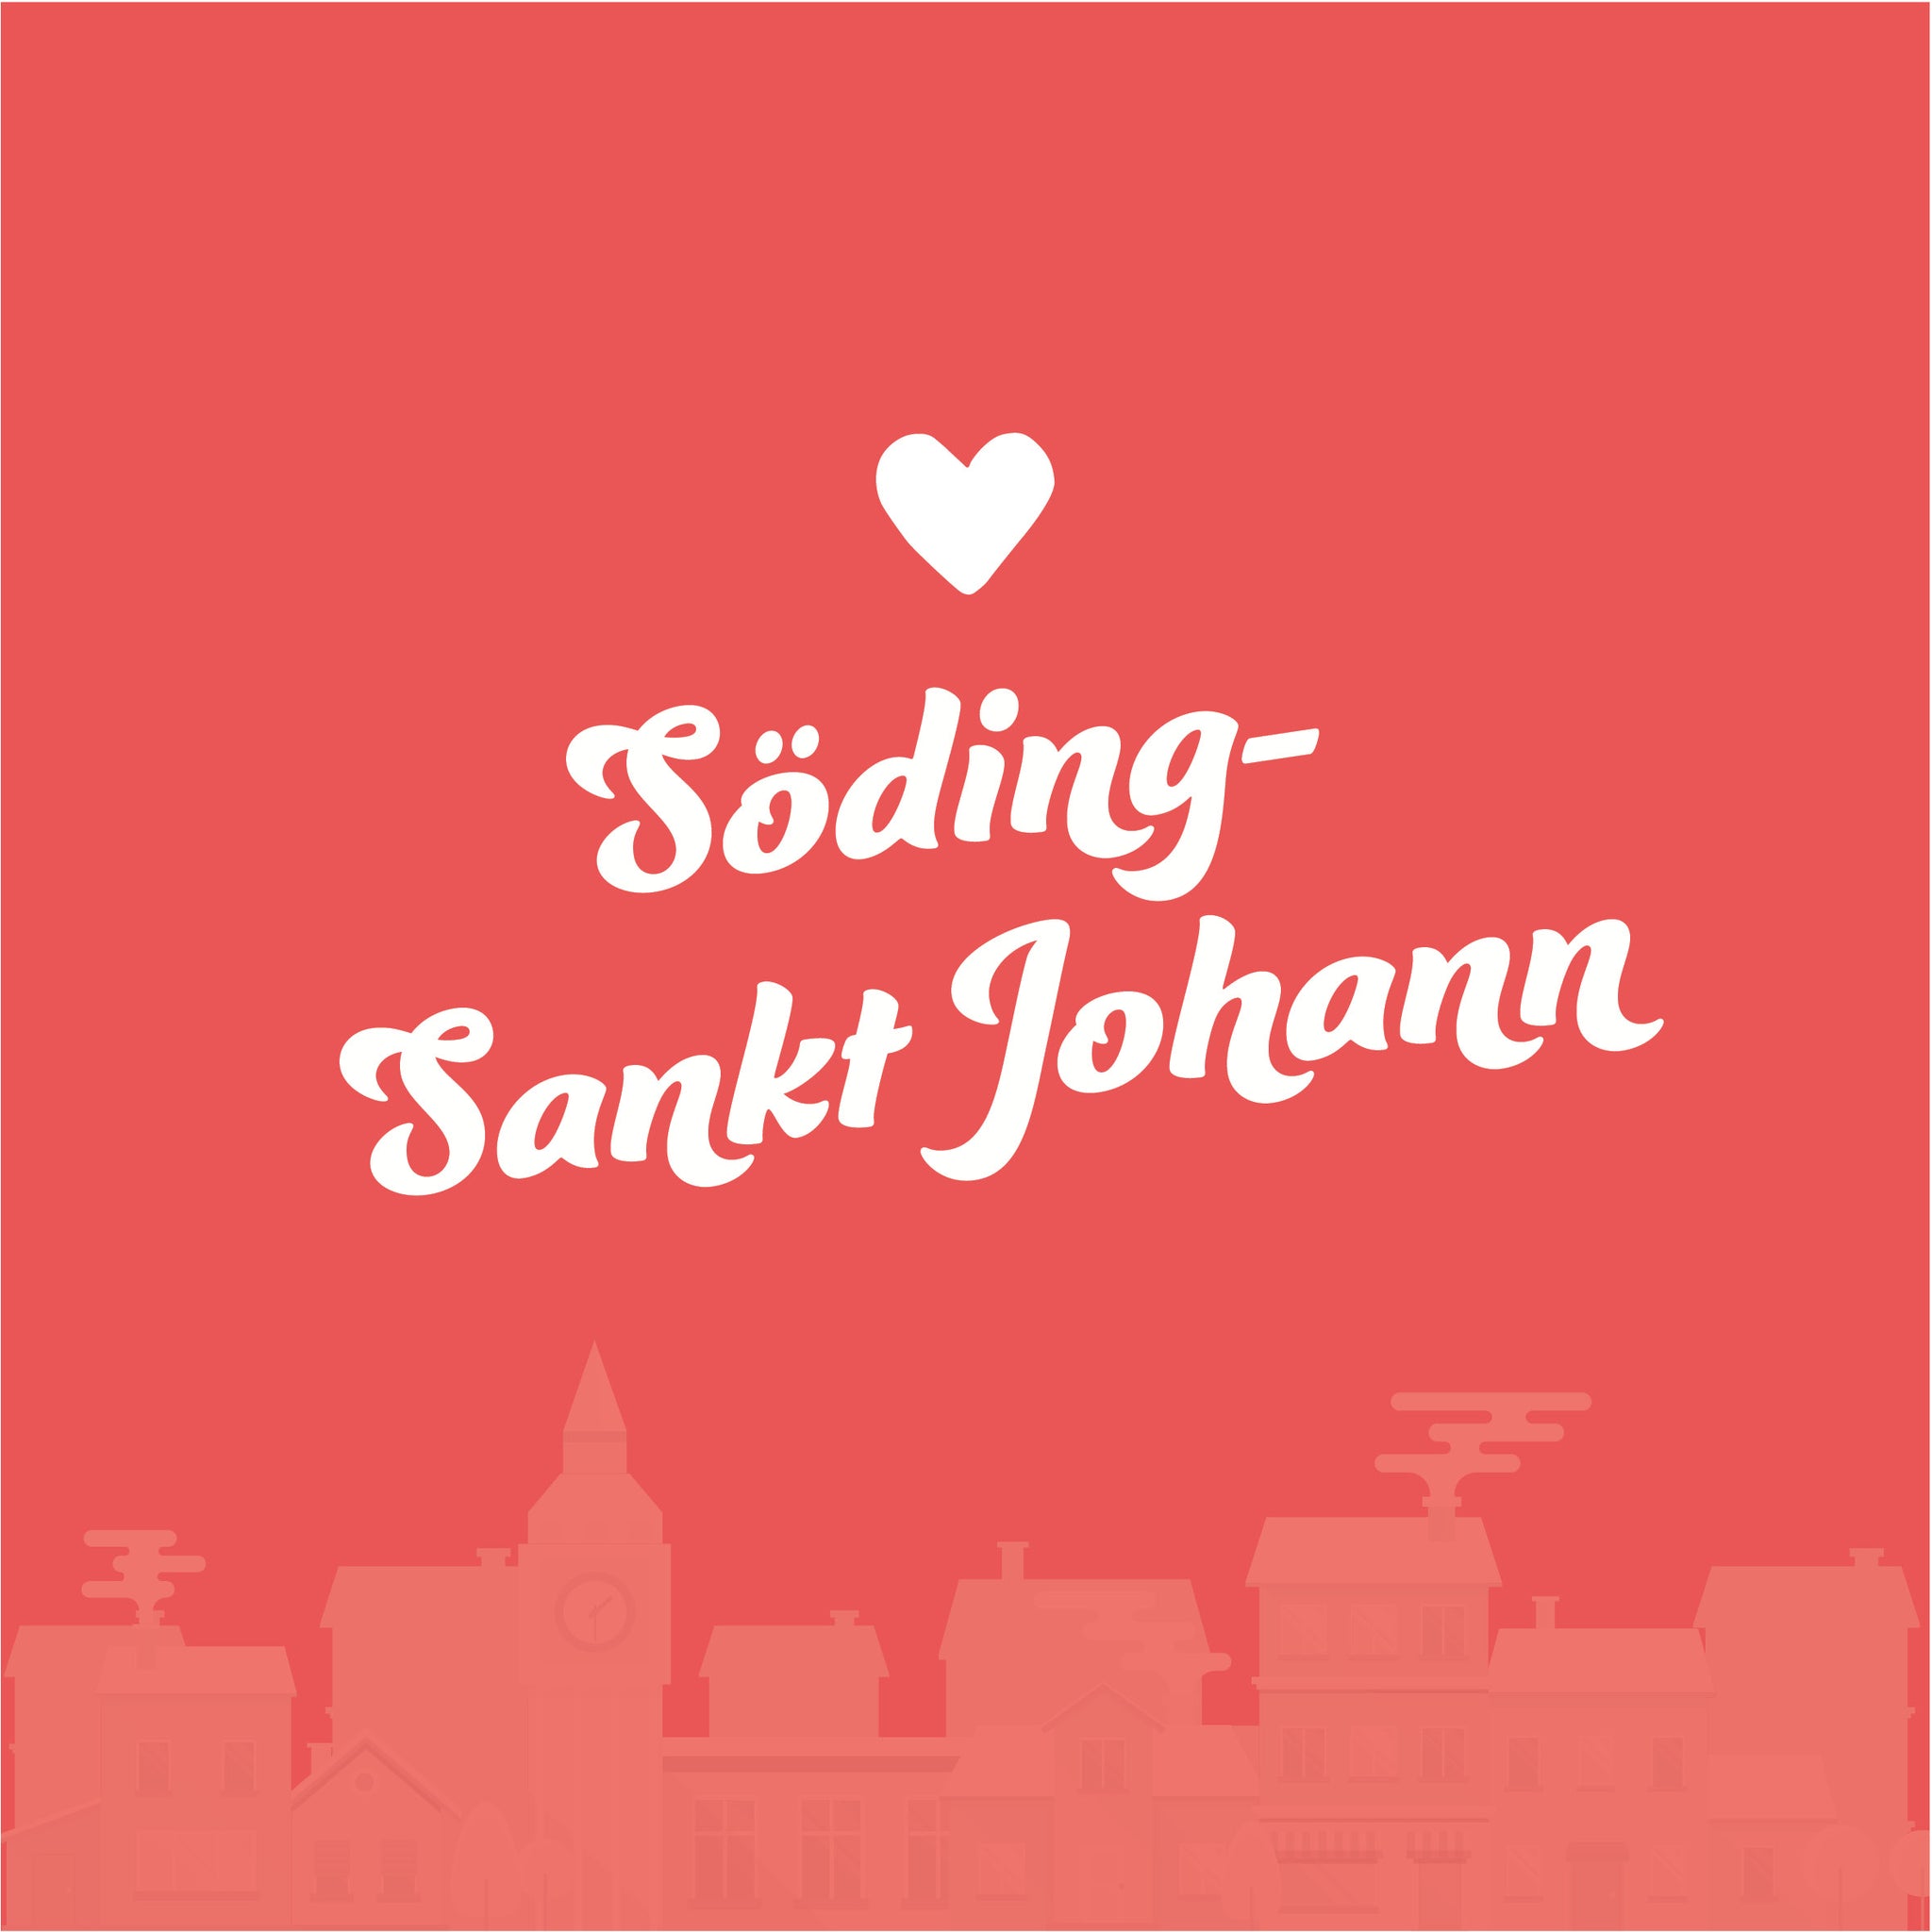 Söding-Sankt Johann